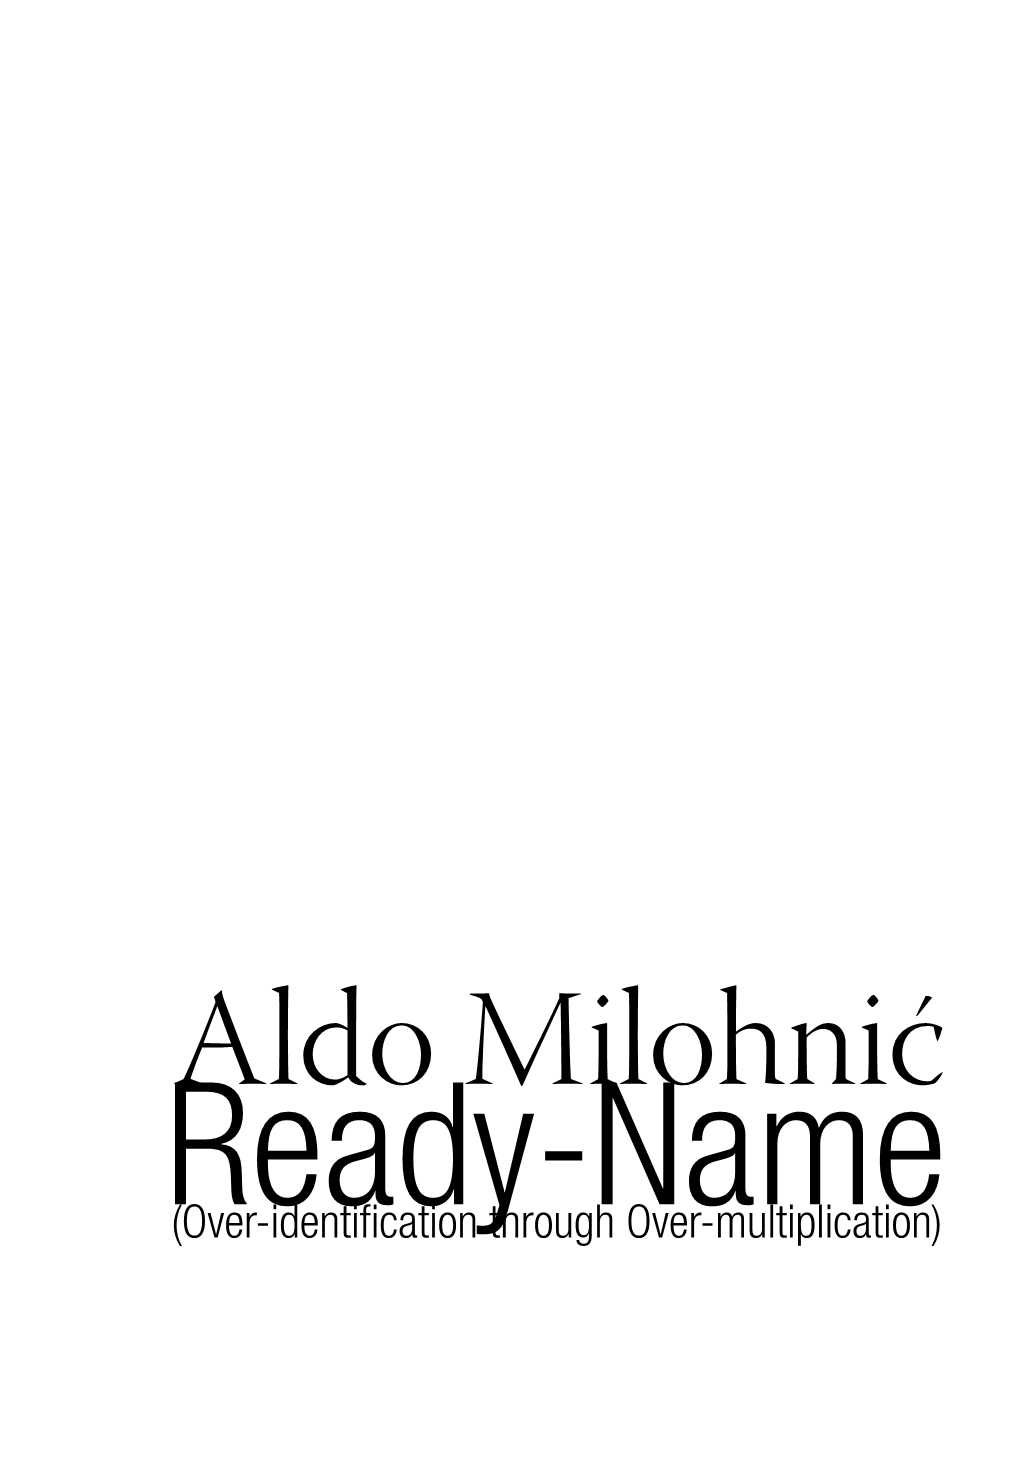 Aldo Milohnić (Over-Identification Through Over-Multiplication) 122